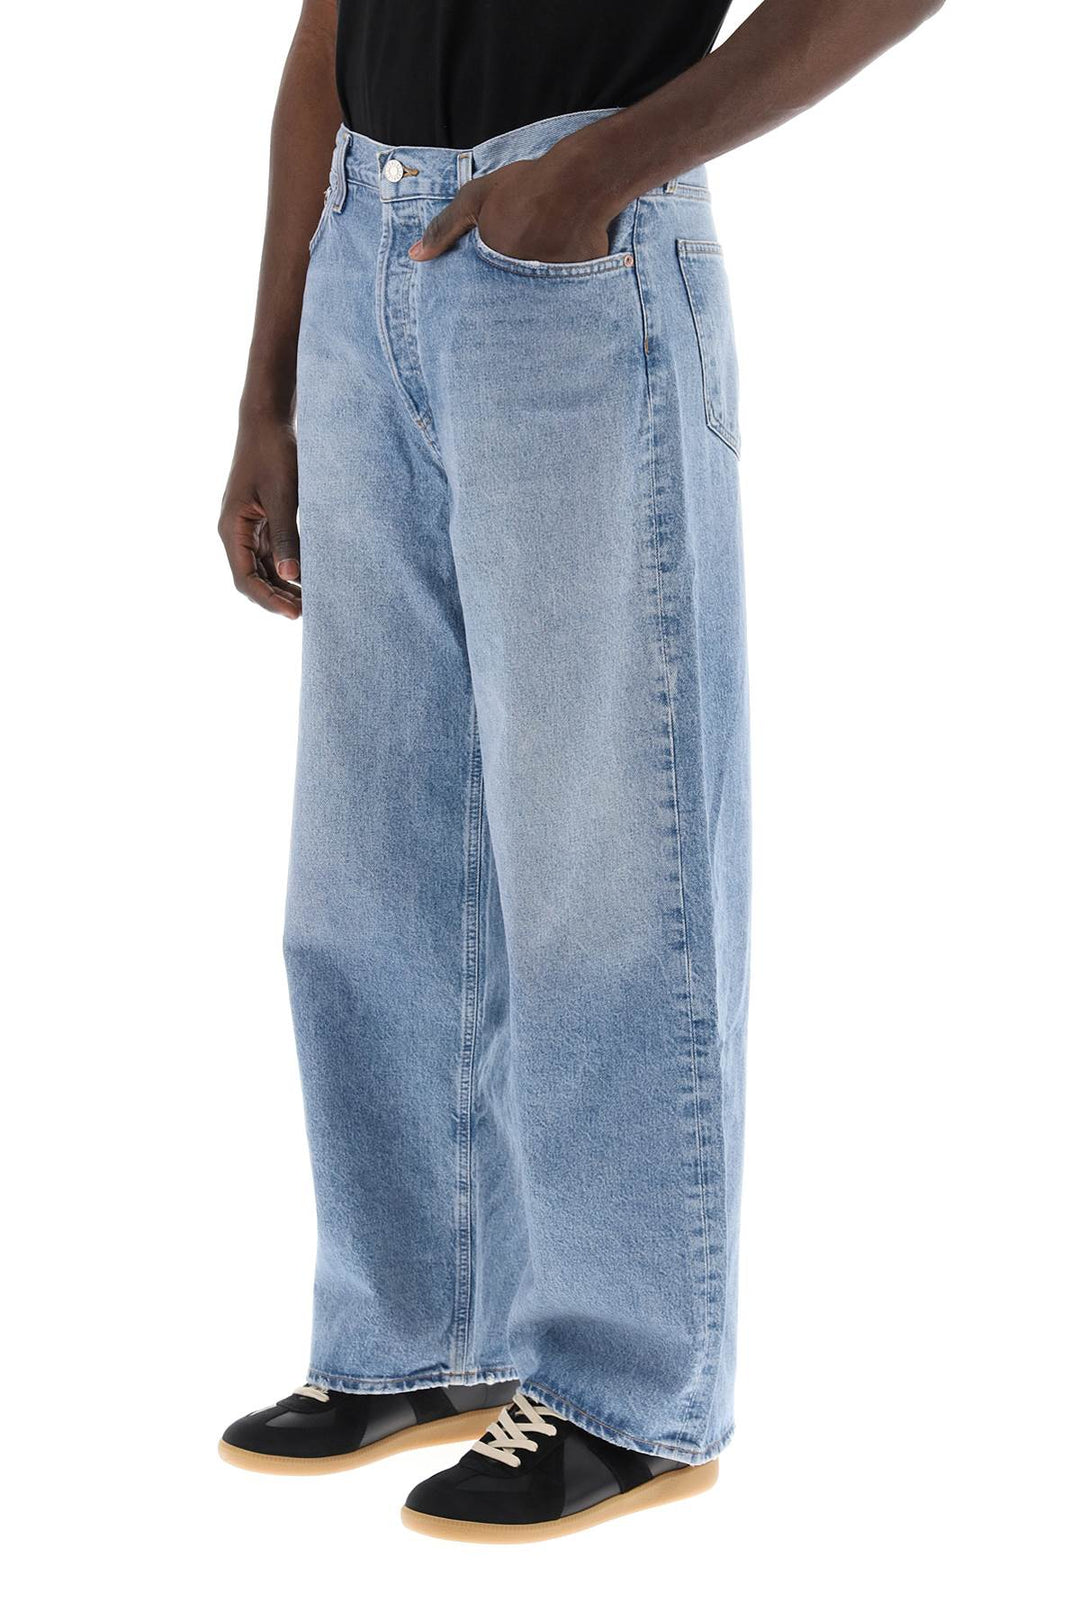 Agolde Low Slung Baggy Jeans   Blu